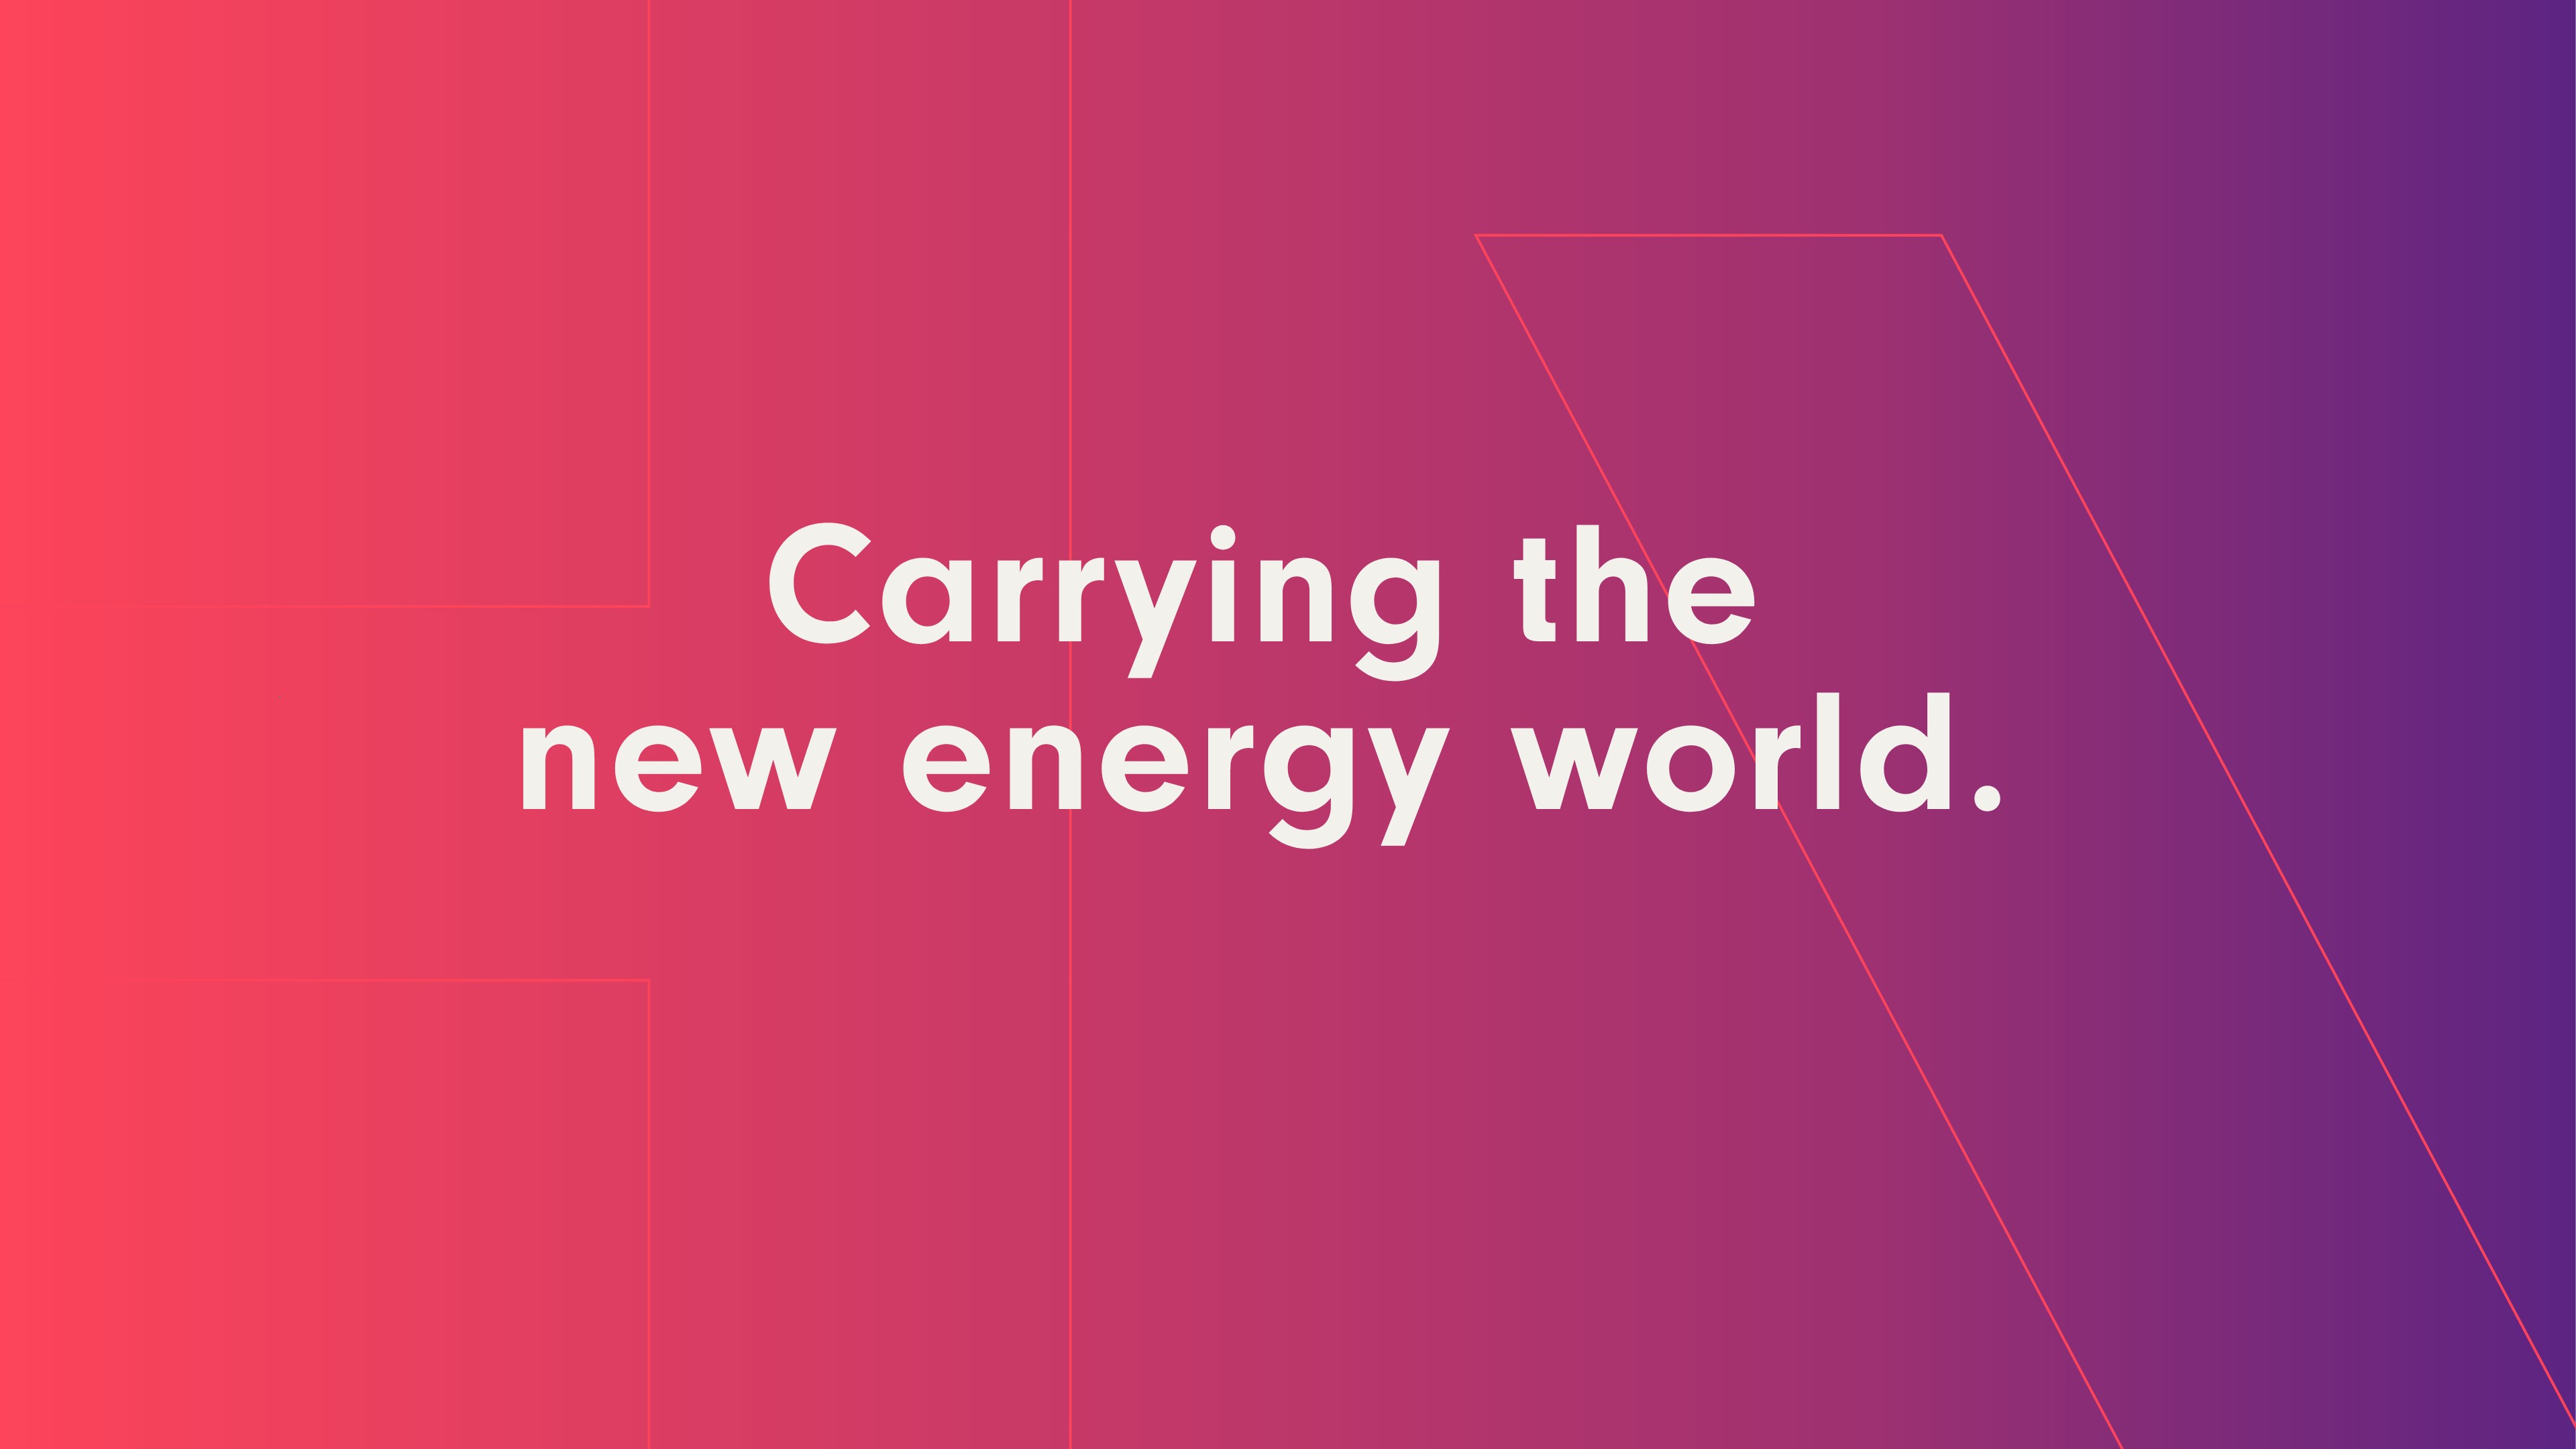 Headgrafik: "Carrying the new energy world"